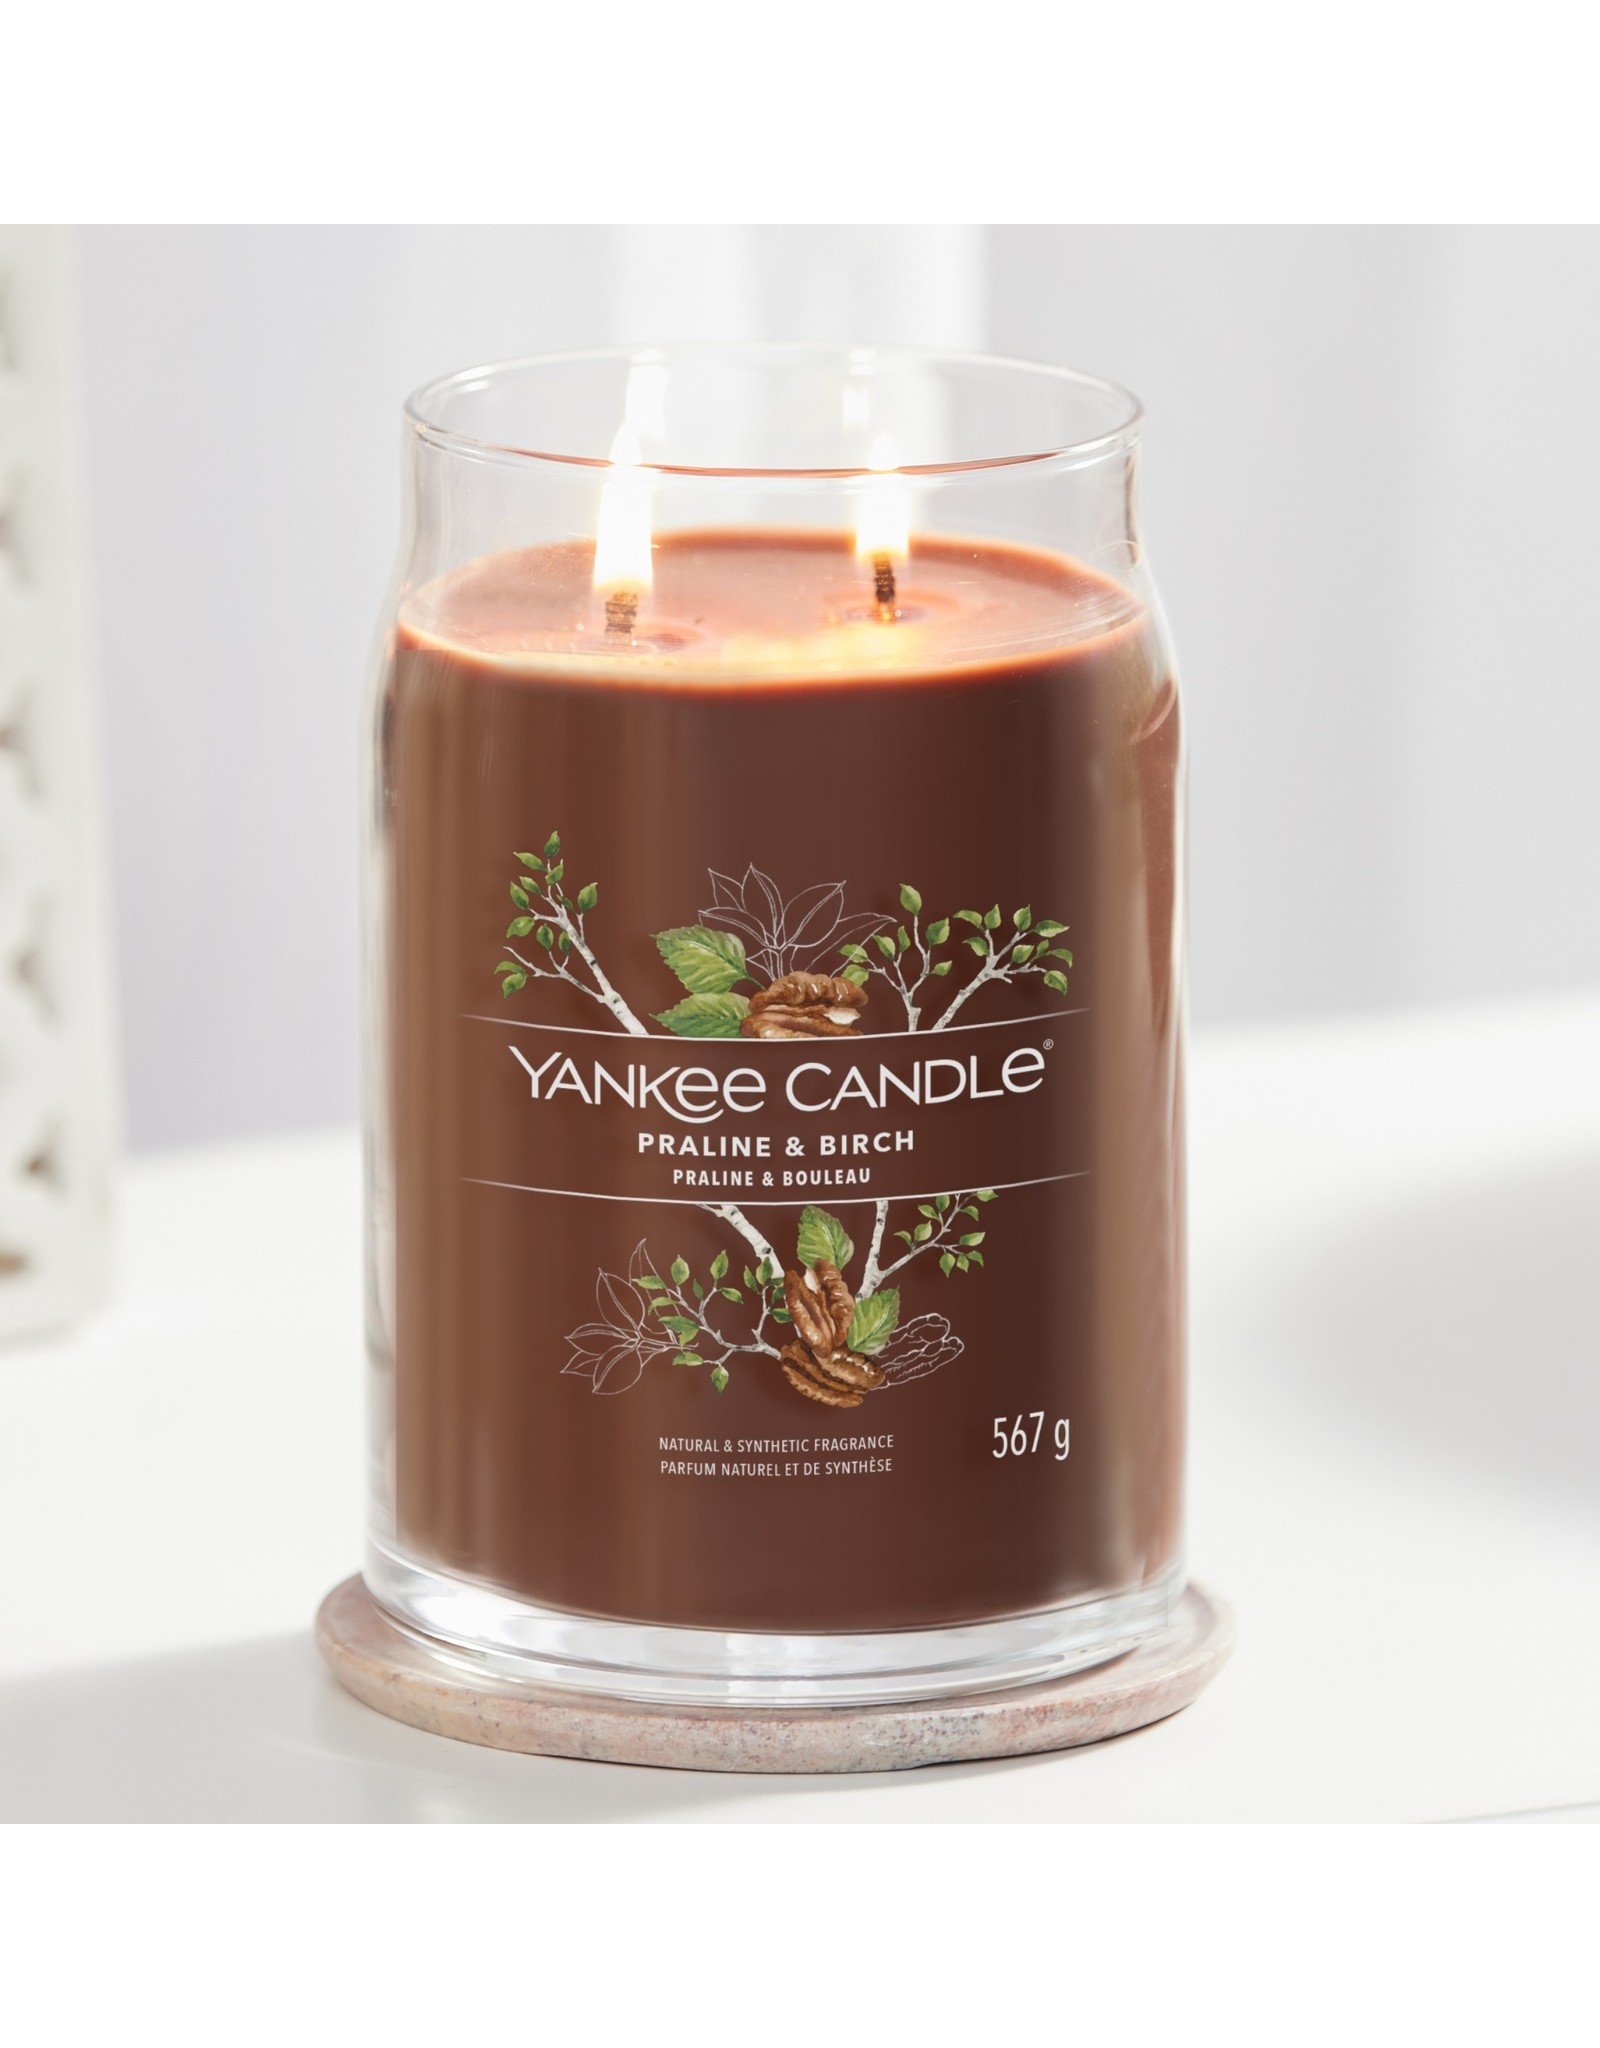 Yankee Candle Praline & Birch - Signature Large Jar